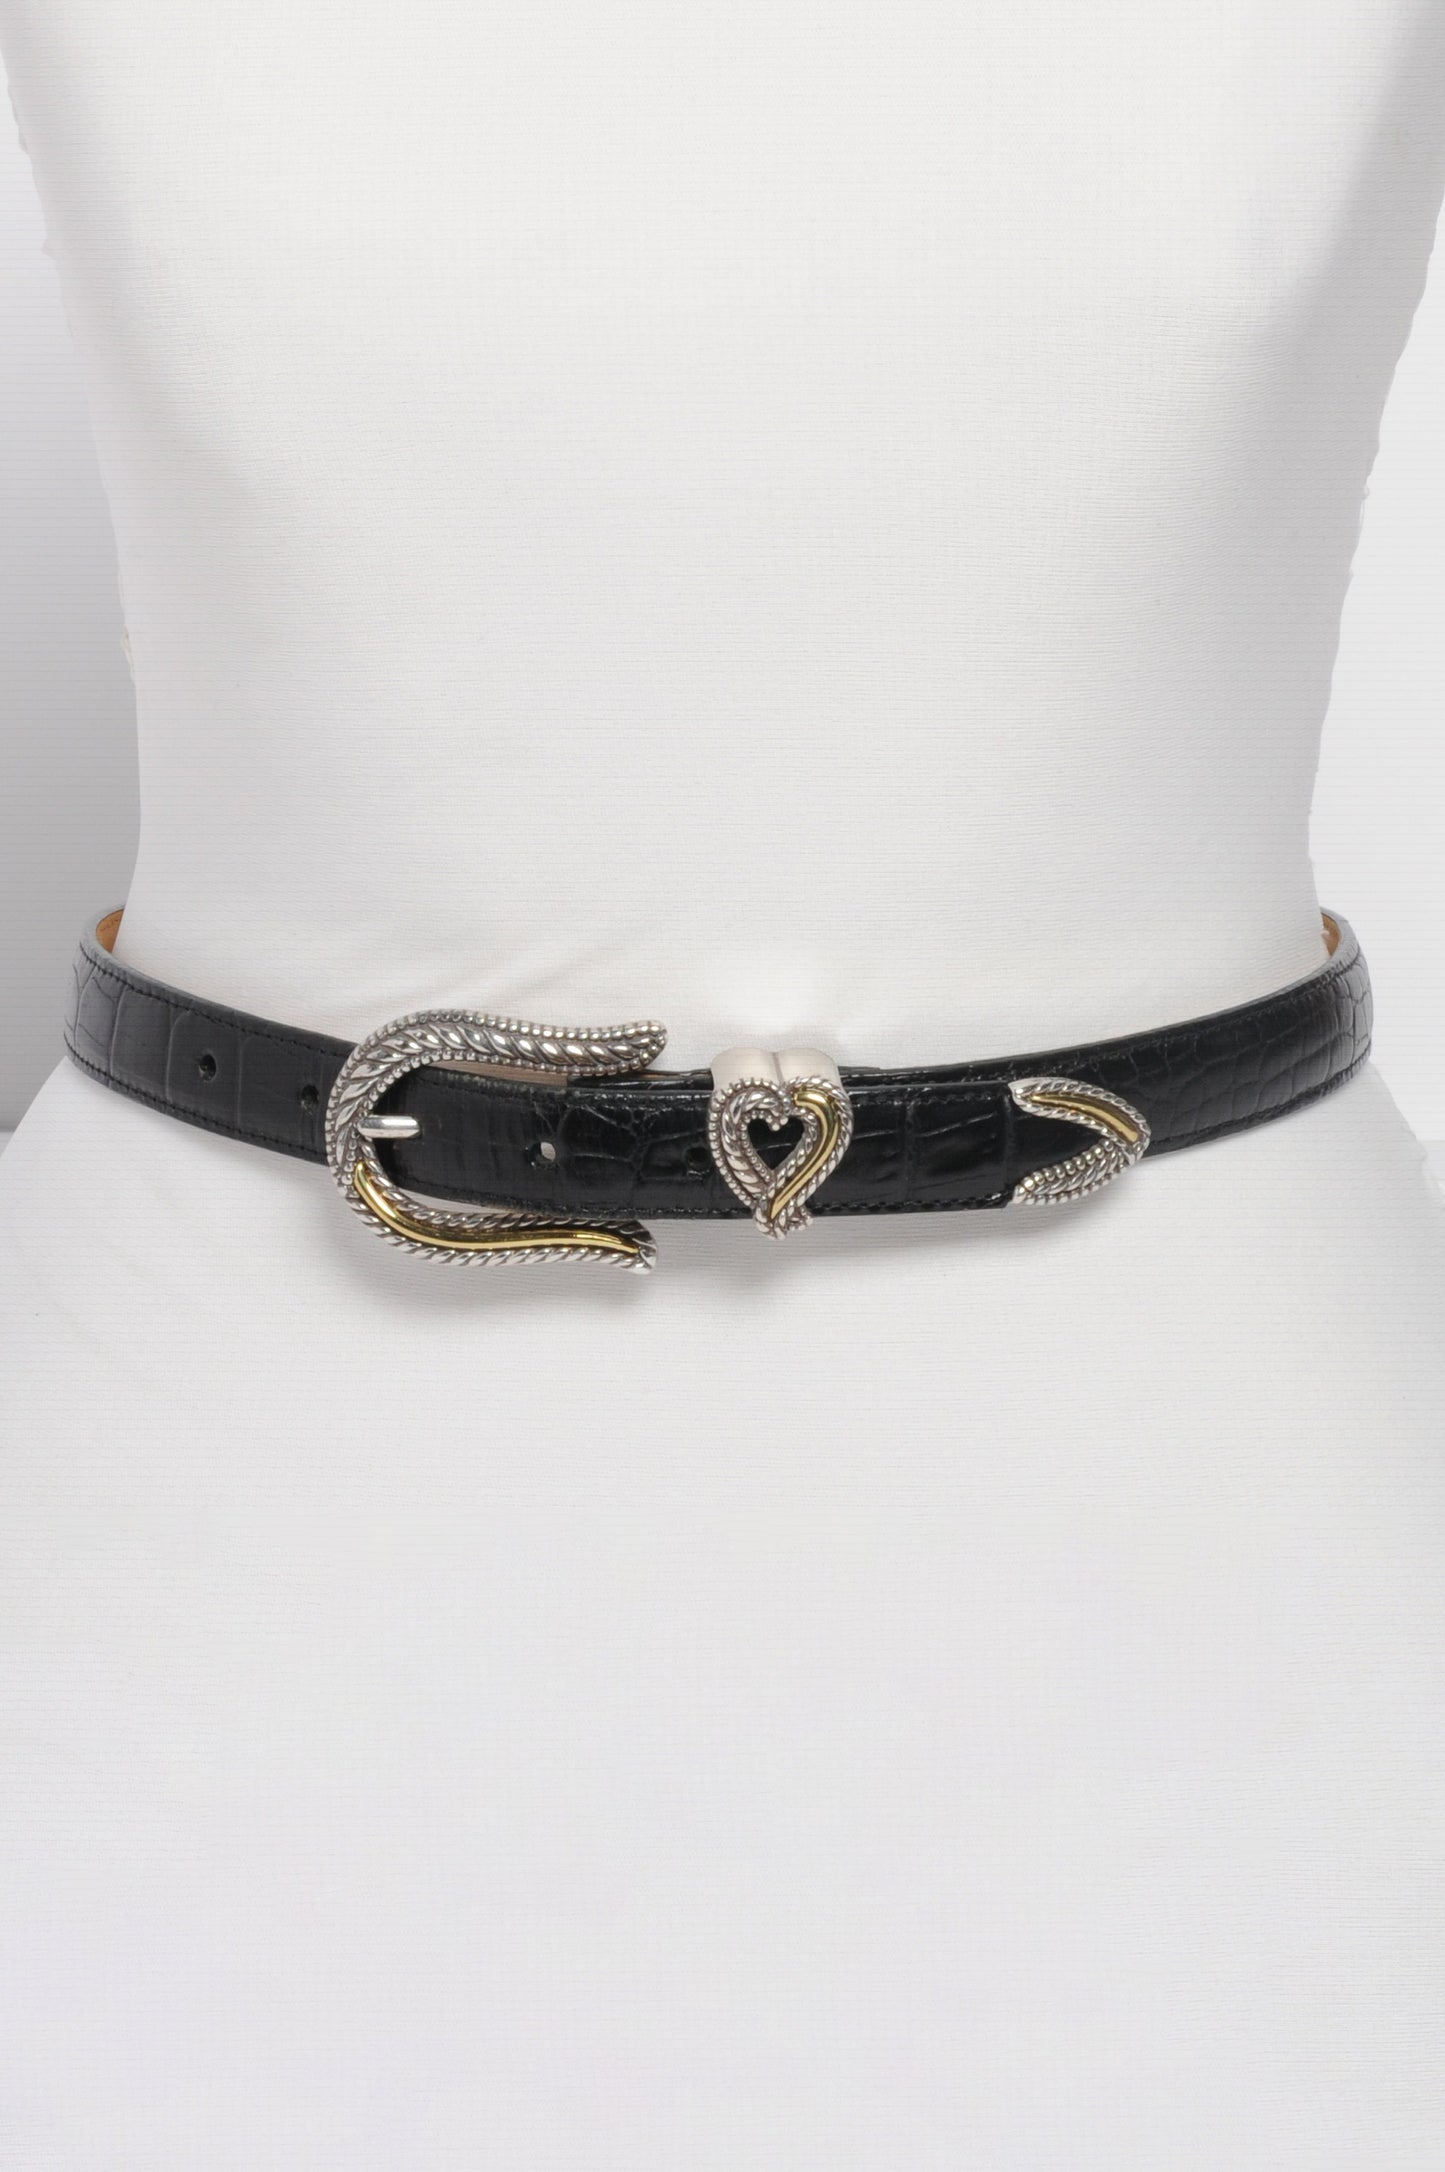 Two Tone Black Leather Belt